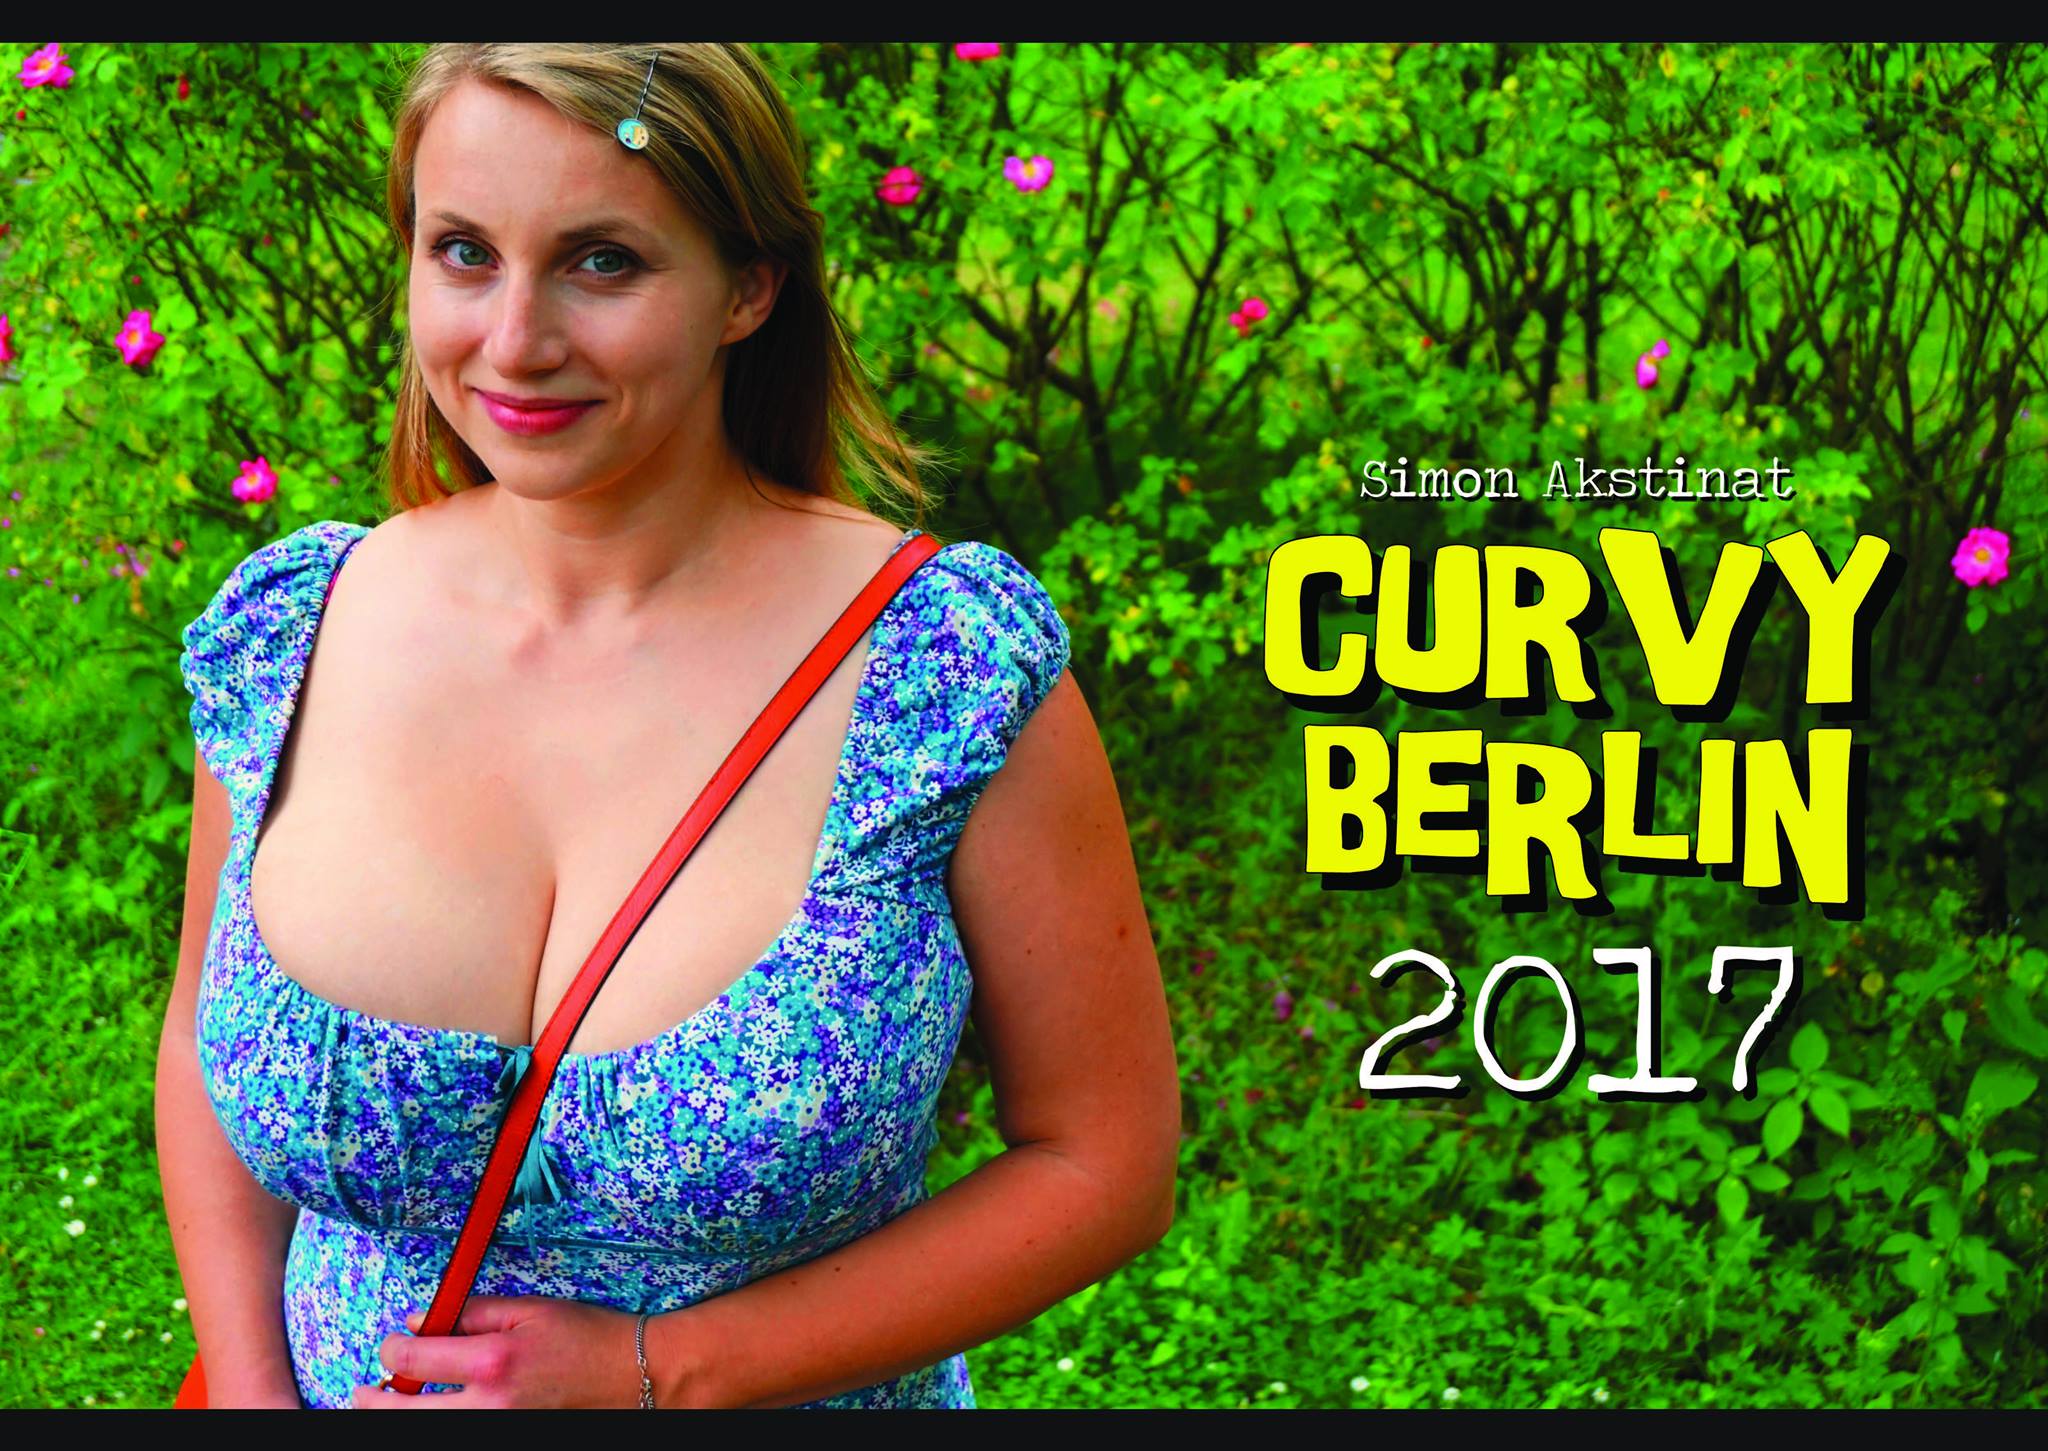 CURVY BERLIN Calendar 2017 Digital Curvy Berlin.